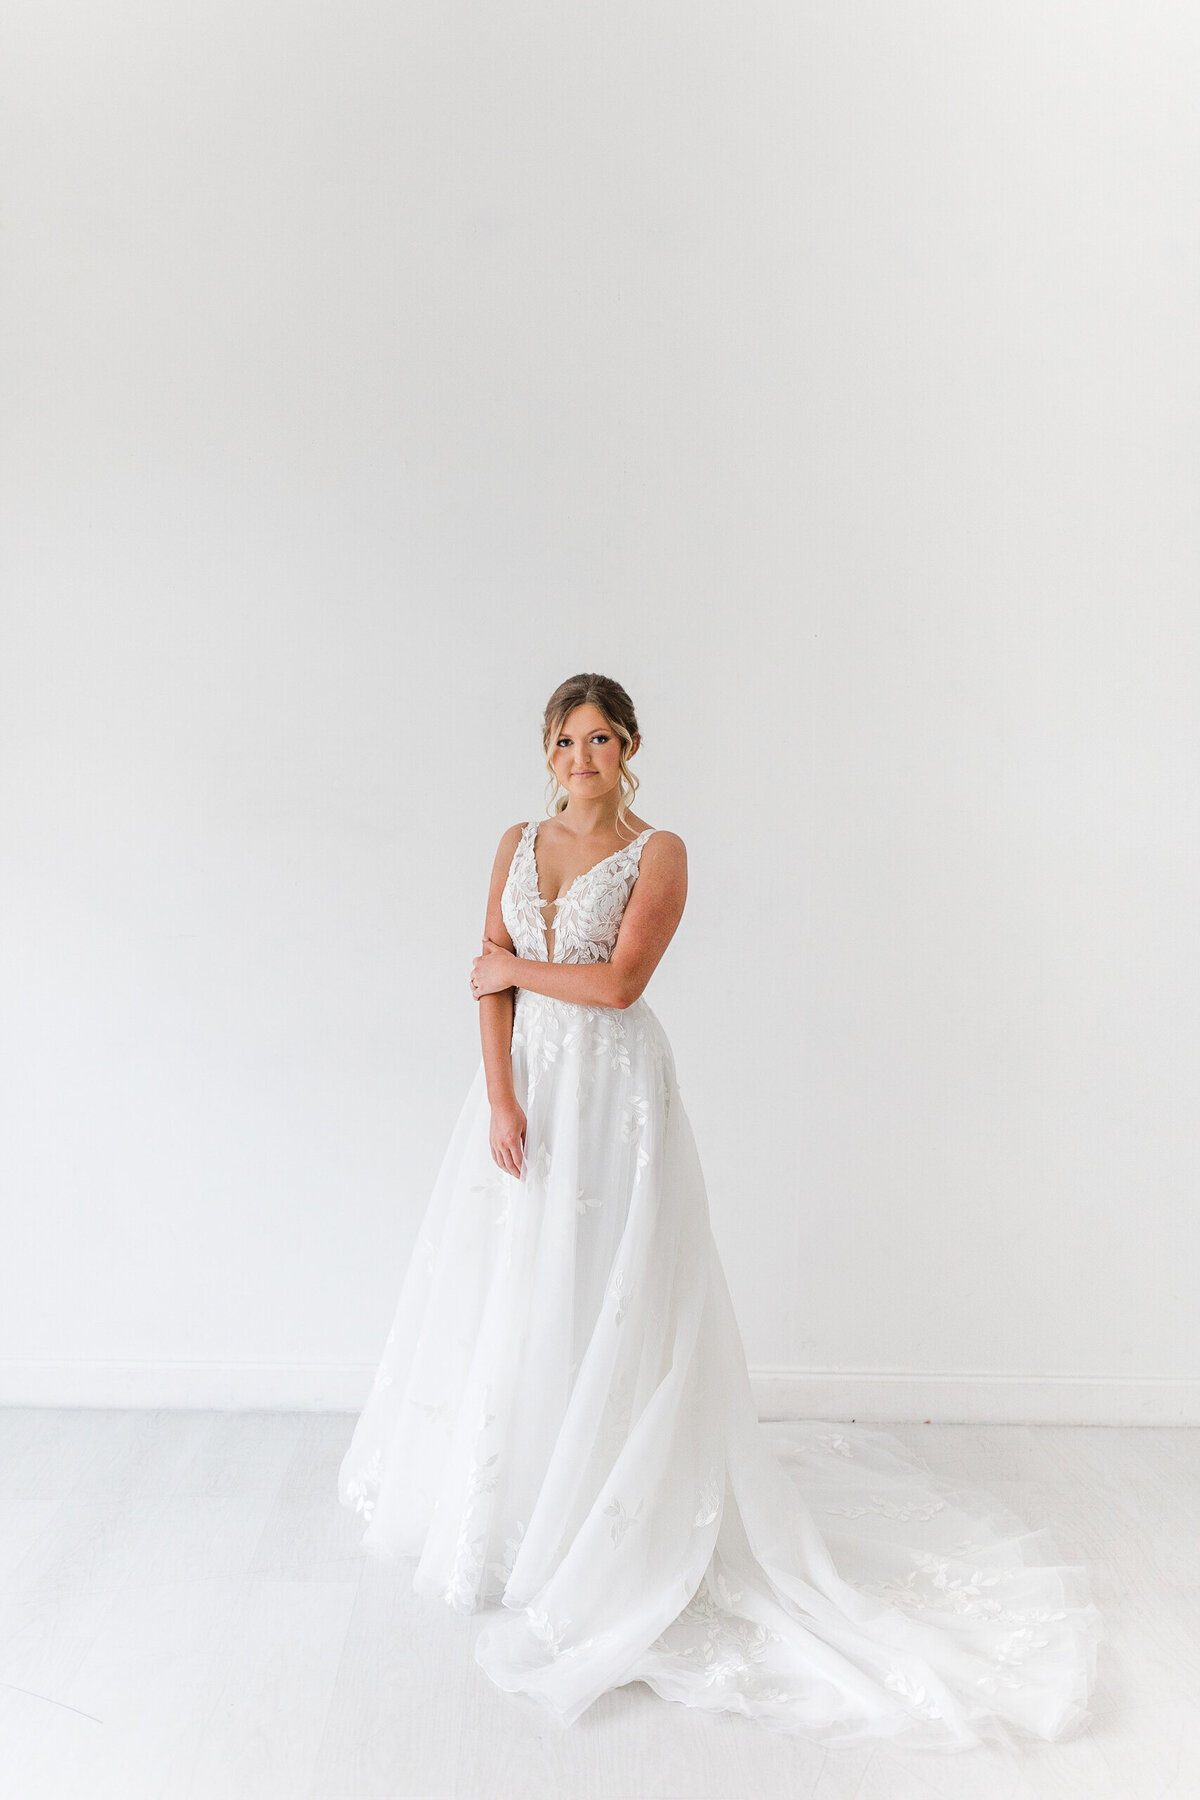 Marissa Reib Photography | Tulsa Wedding Photographer-28-2